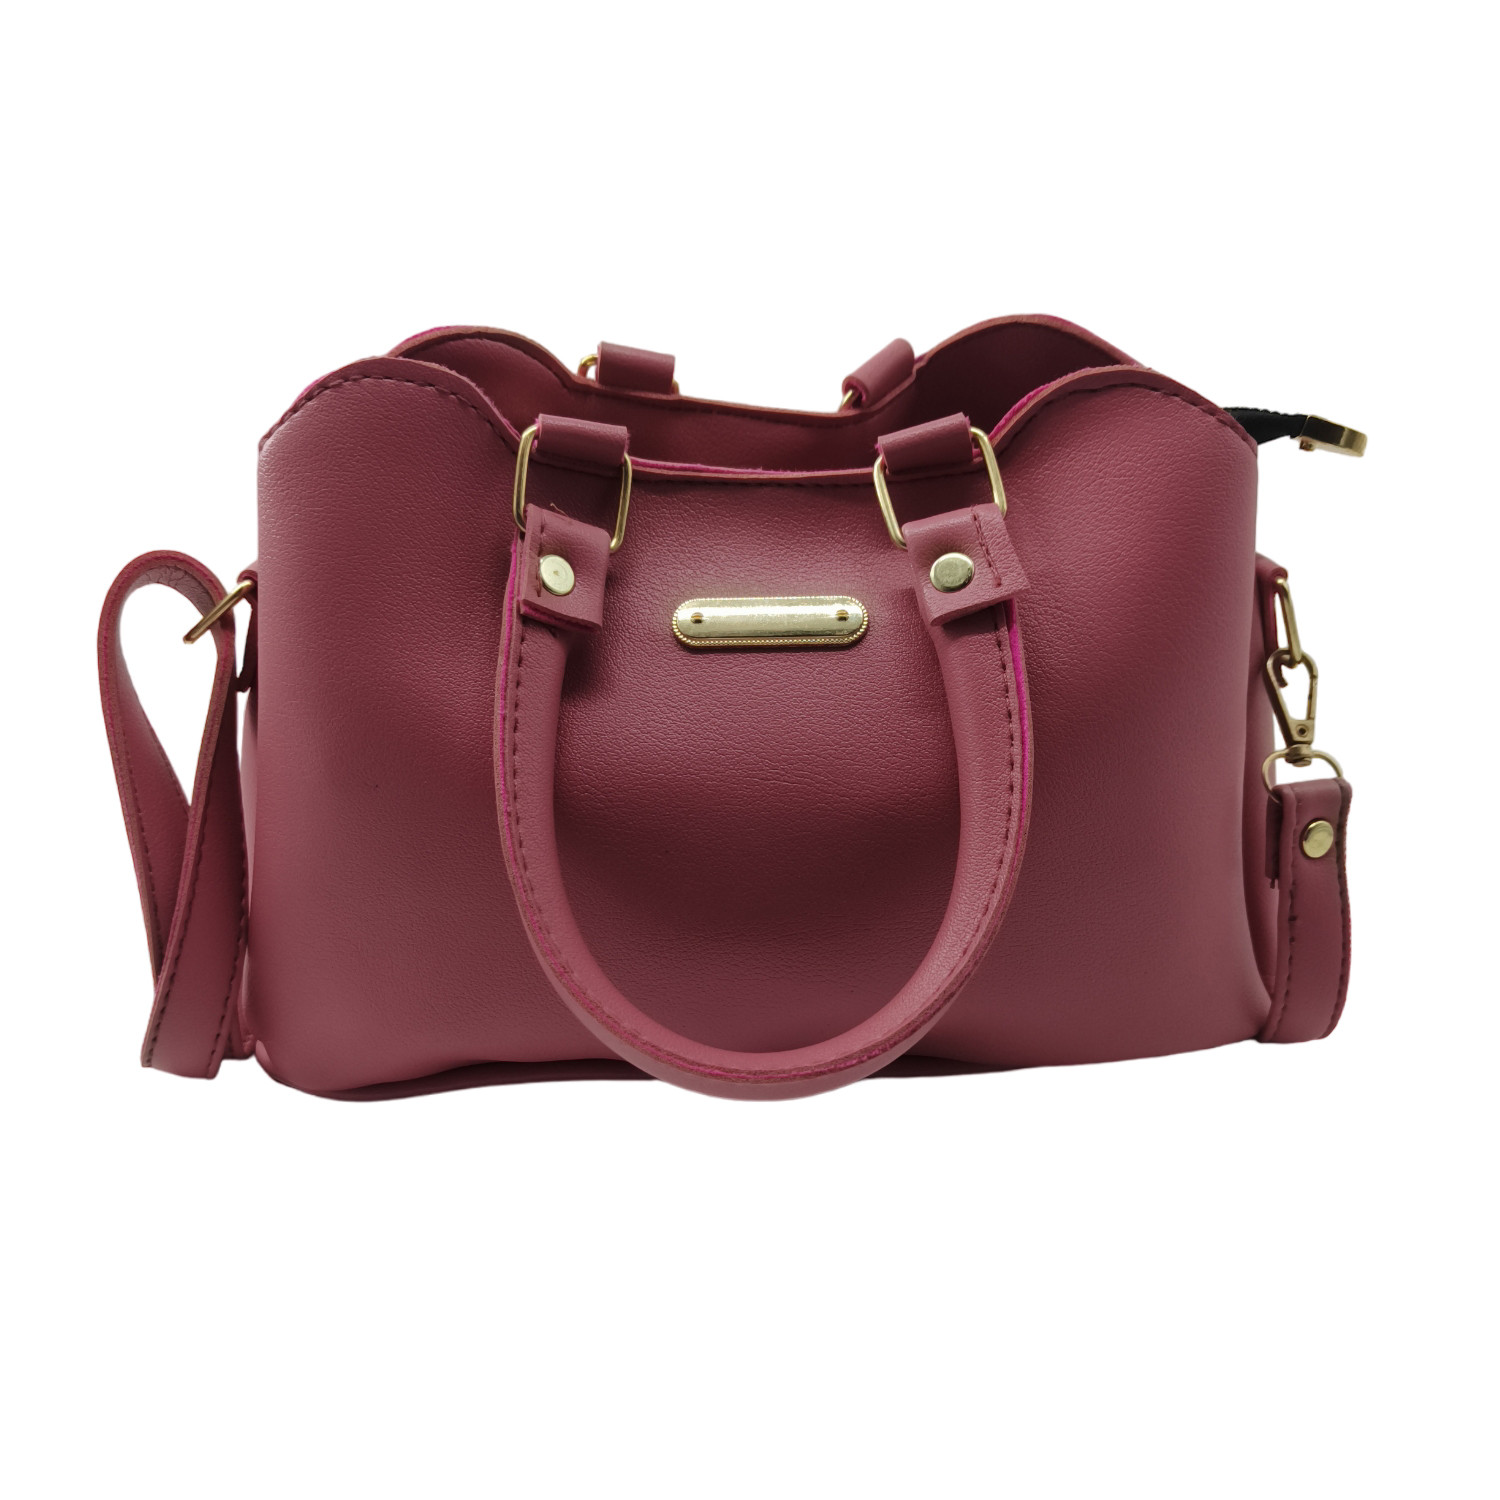 Buy FIKA Handbag For Women And Girls | Ladies purse Handbags | Woman Gifts  | Travel Purse Handbag | Latest style handbags | Satchel bags (Light Pink)  at Amazon.in